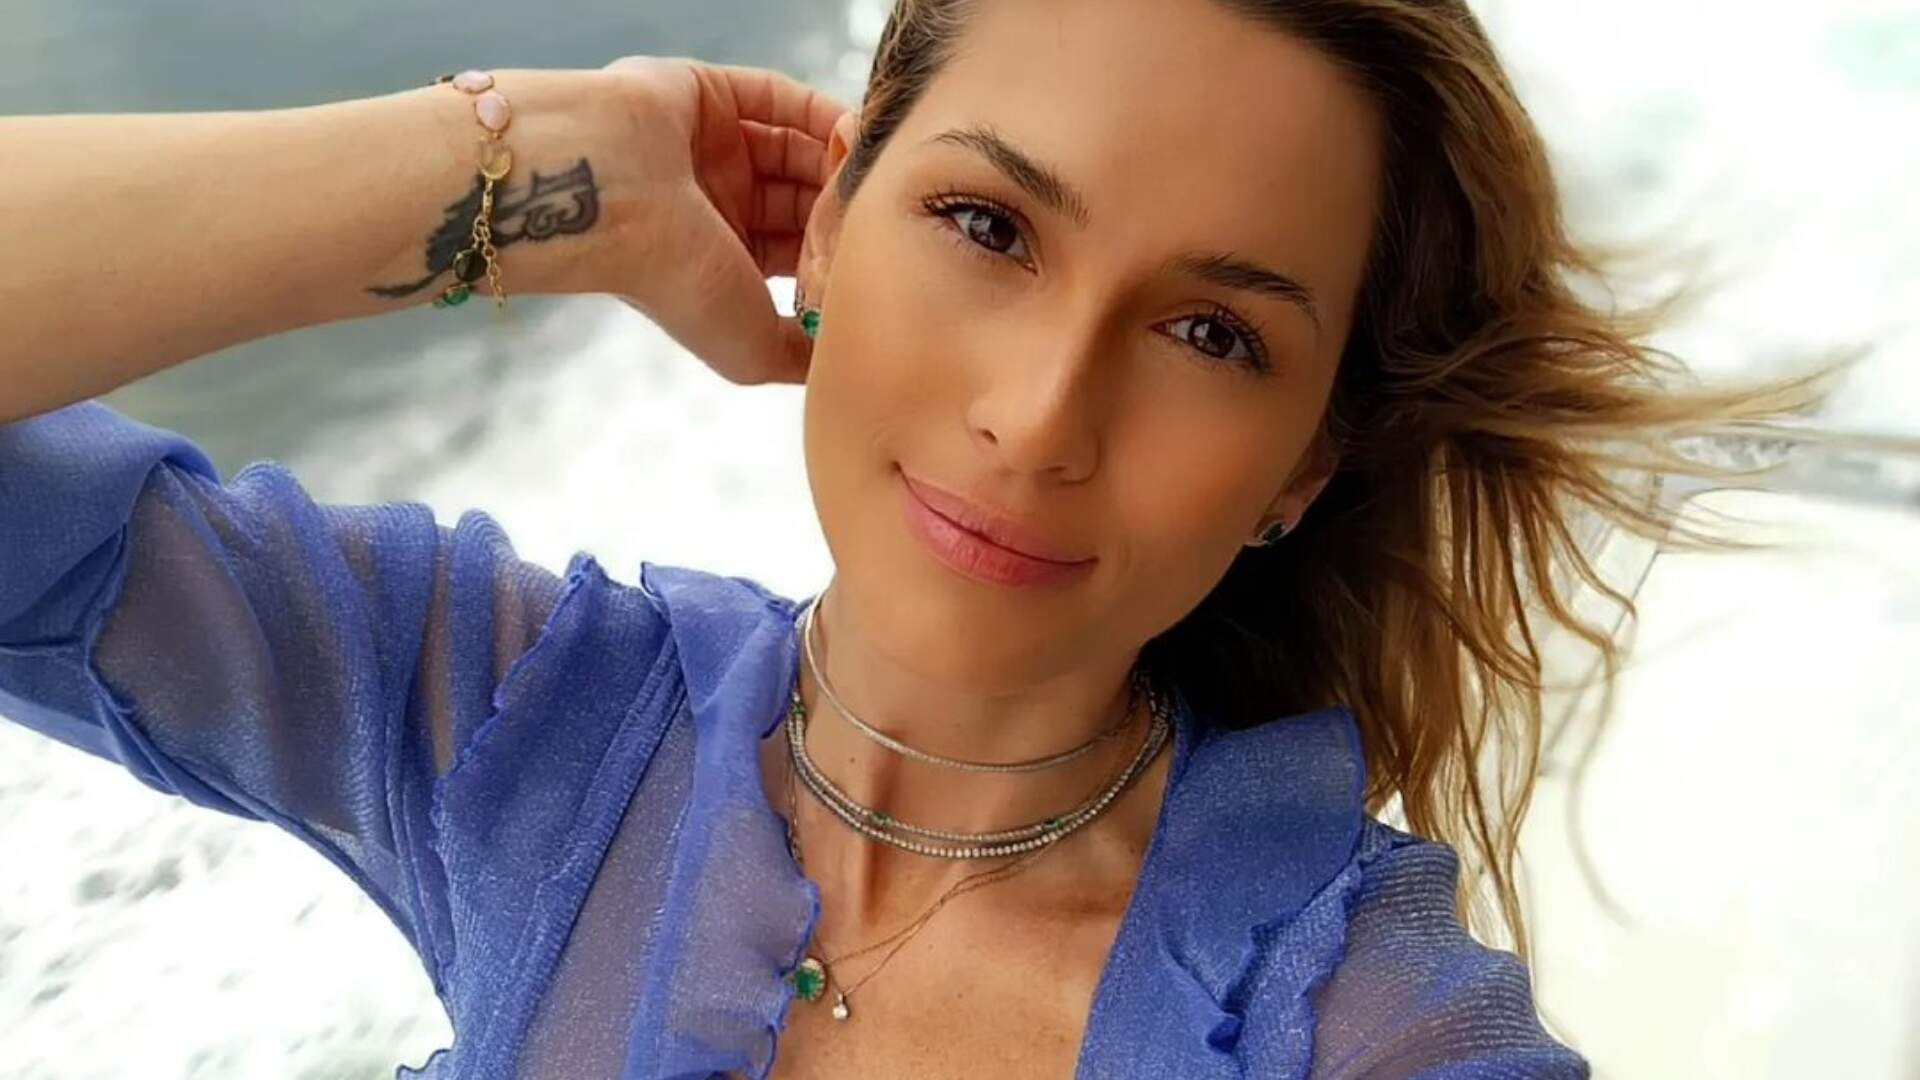 Tá calor aí? Lívia Andrade sai da piscina e vai refrescar o bumbum de forma distraída na geladeira - Metropolitana FM